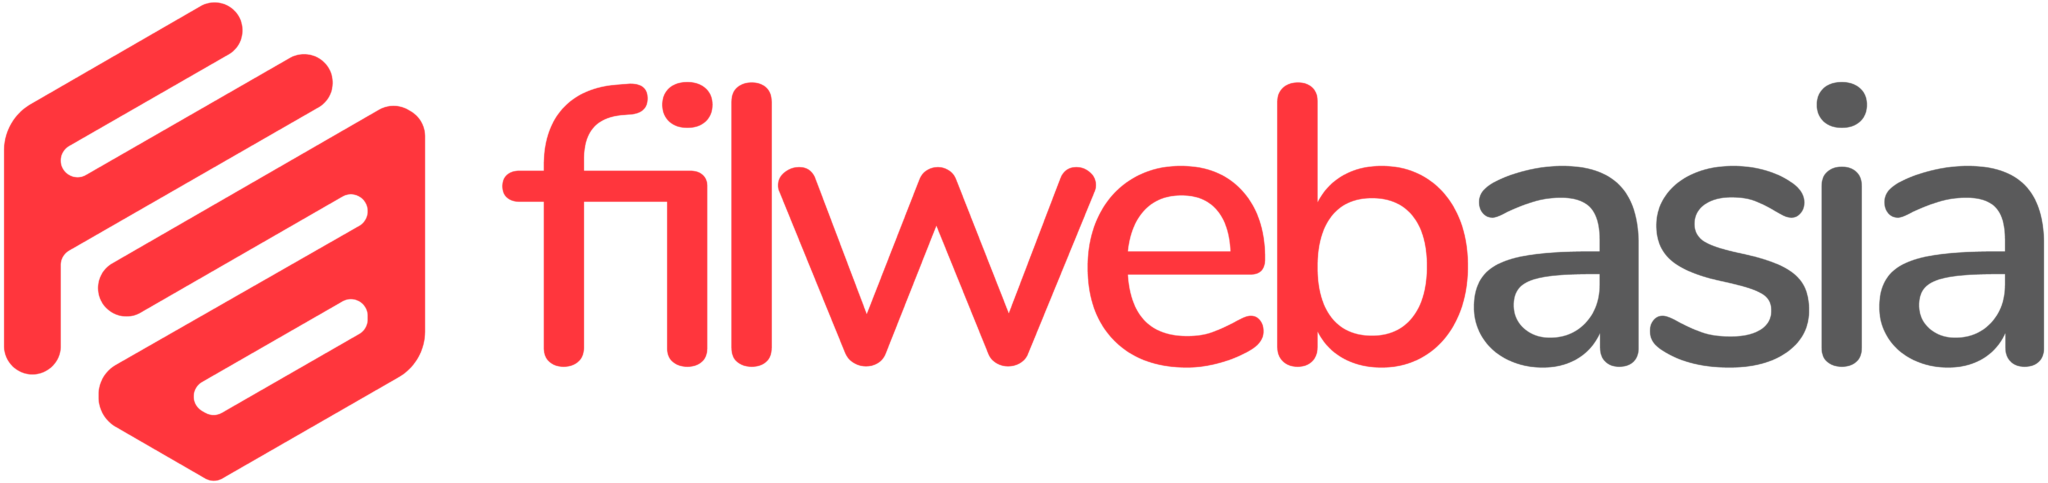 filwebasia logo primary